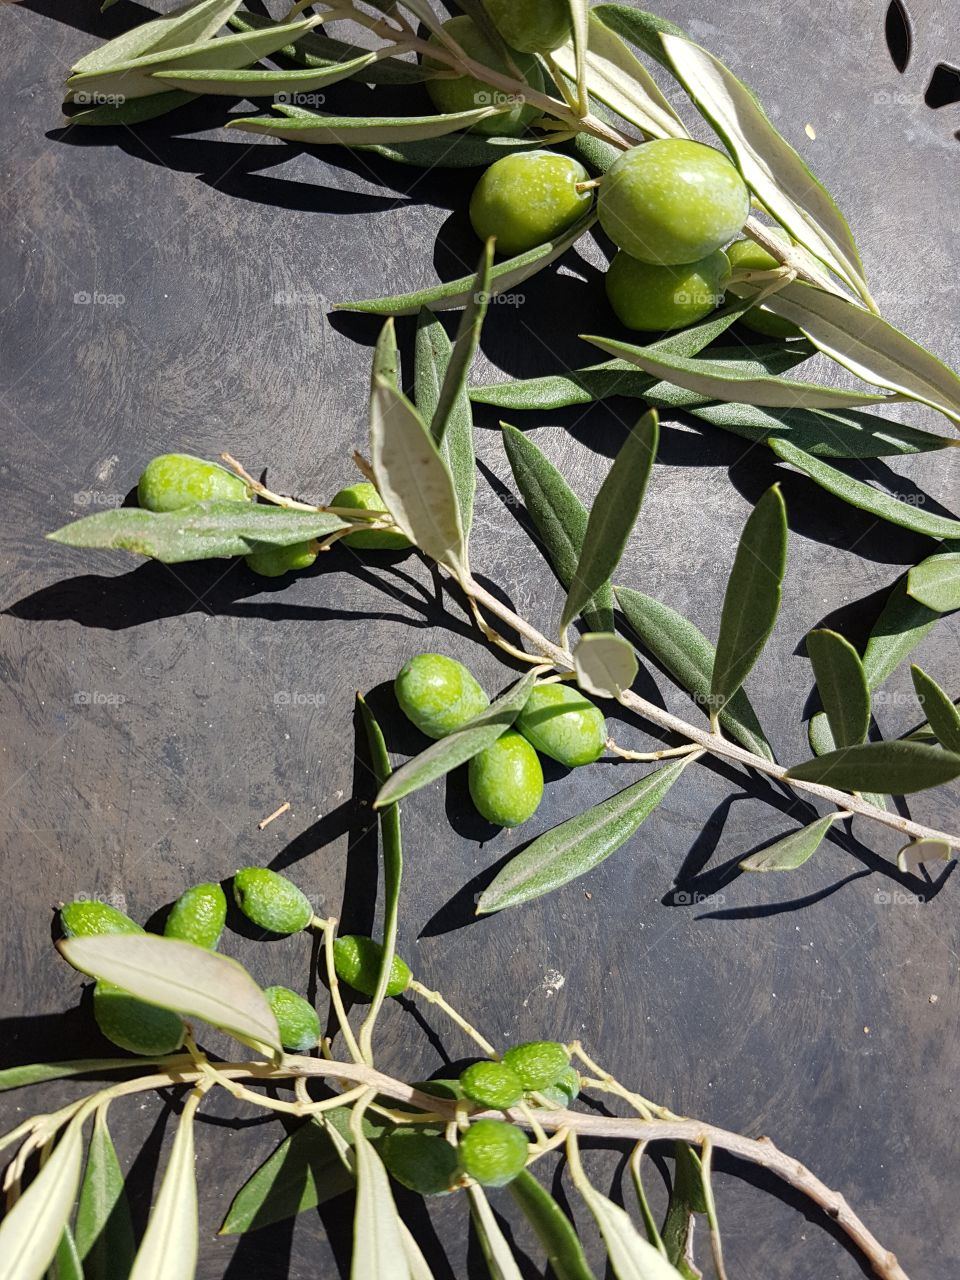 3 sorts of olives Tunisia